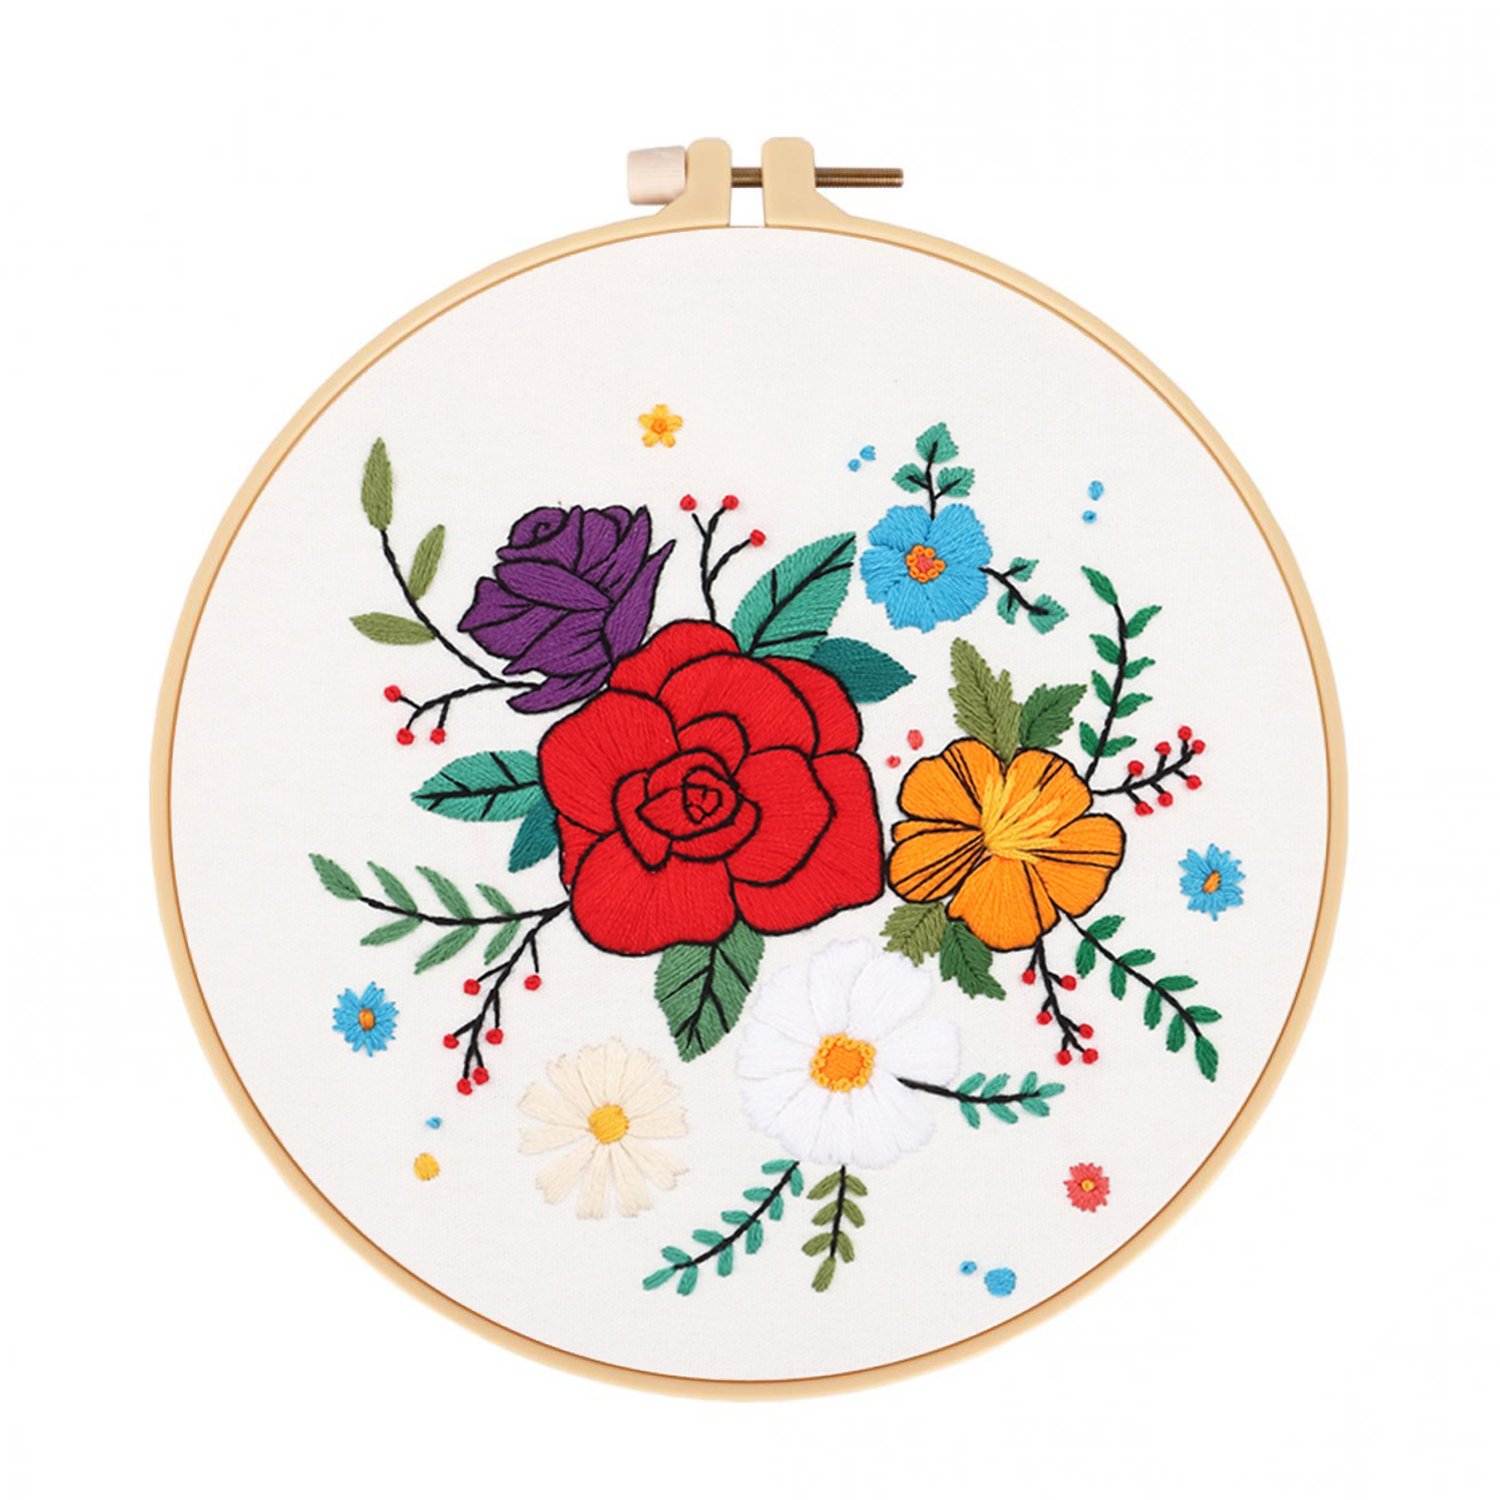 Handmade Embroidery Kit Cross stitch kit for Adult Beginner - Blooming Flower Pattern